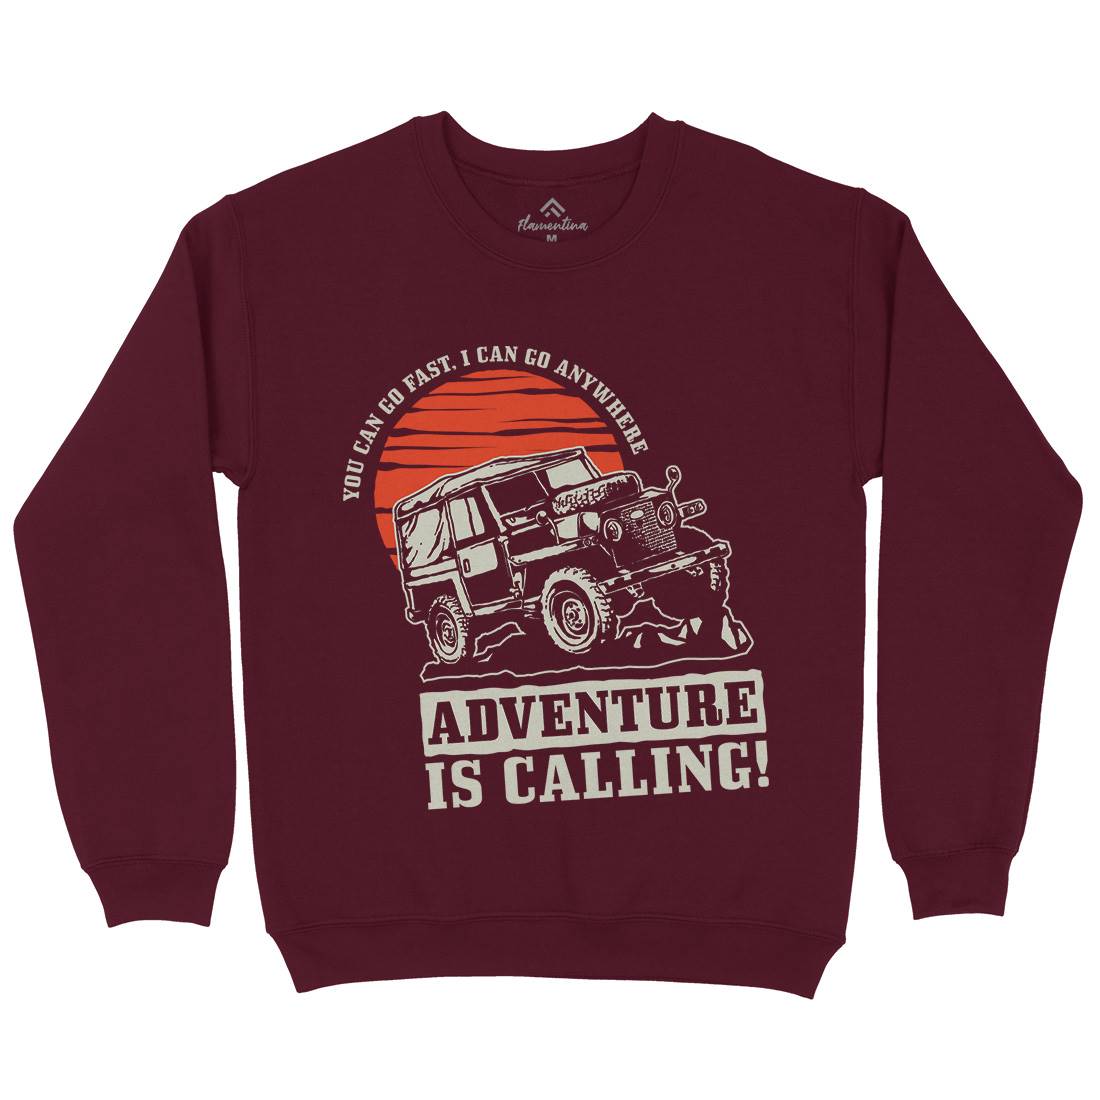 Offroad Adventure Kids Crew Neck Sweatshirt Cars A446